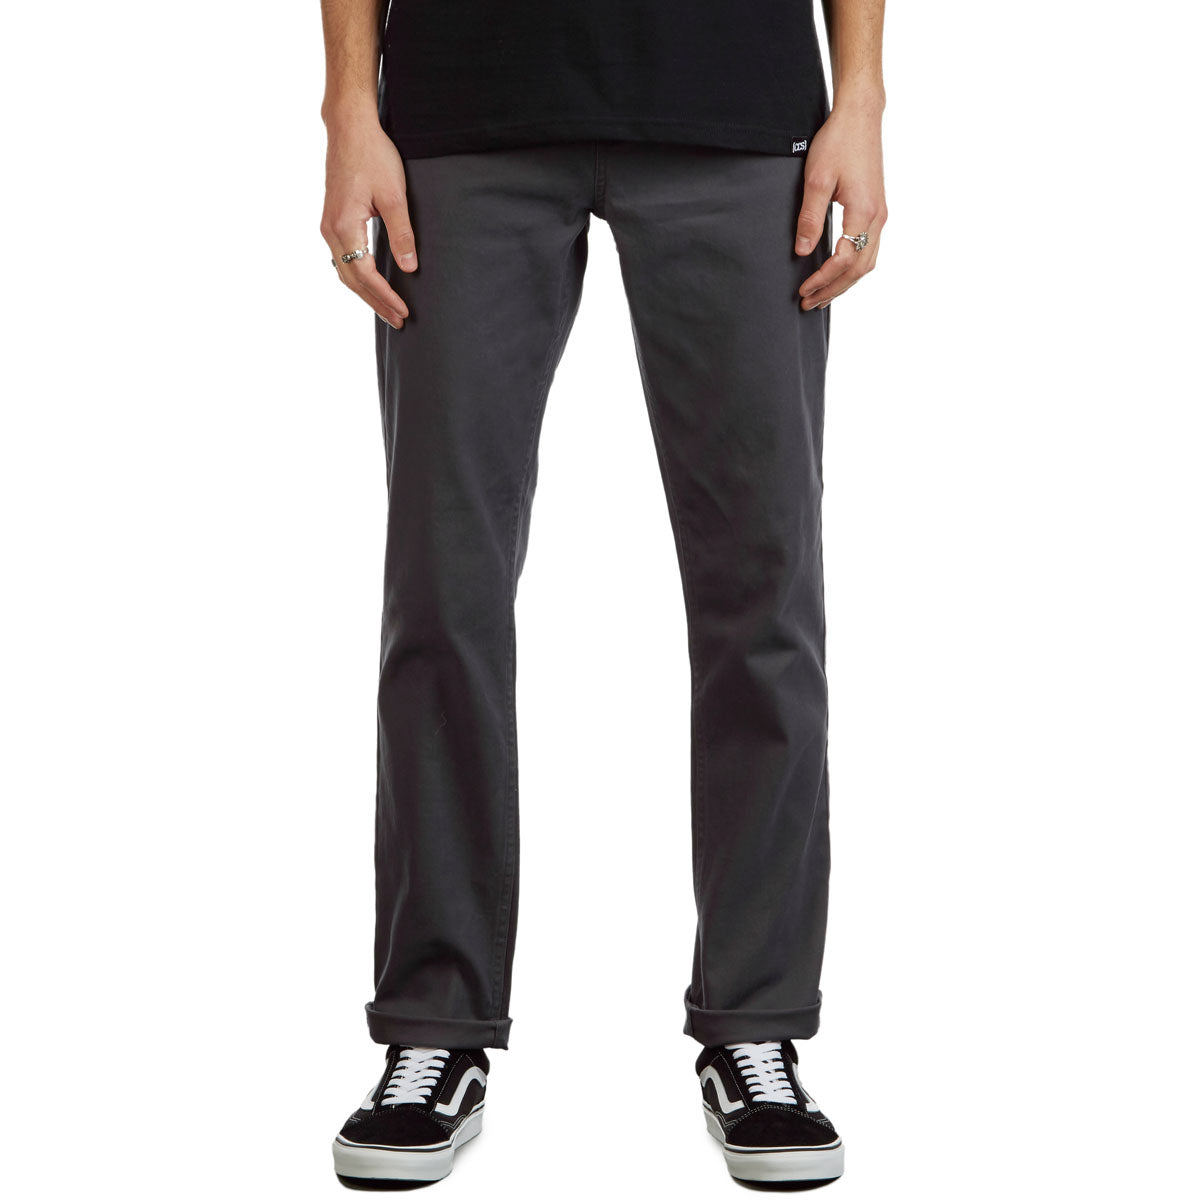 CCS Standard Plus Slim Chino Pants - Grey image 4